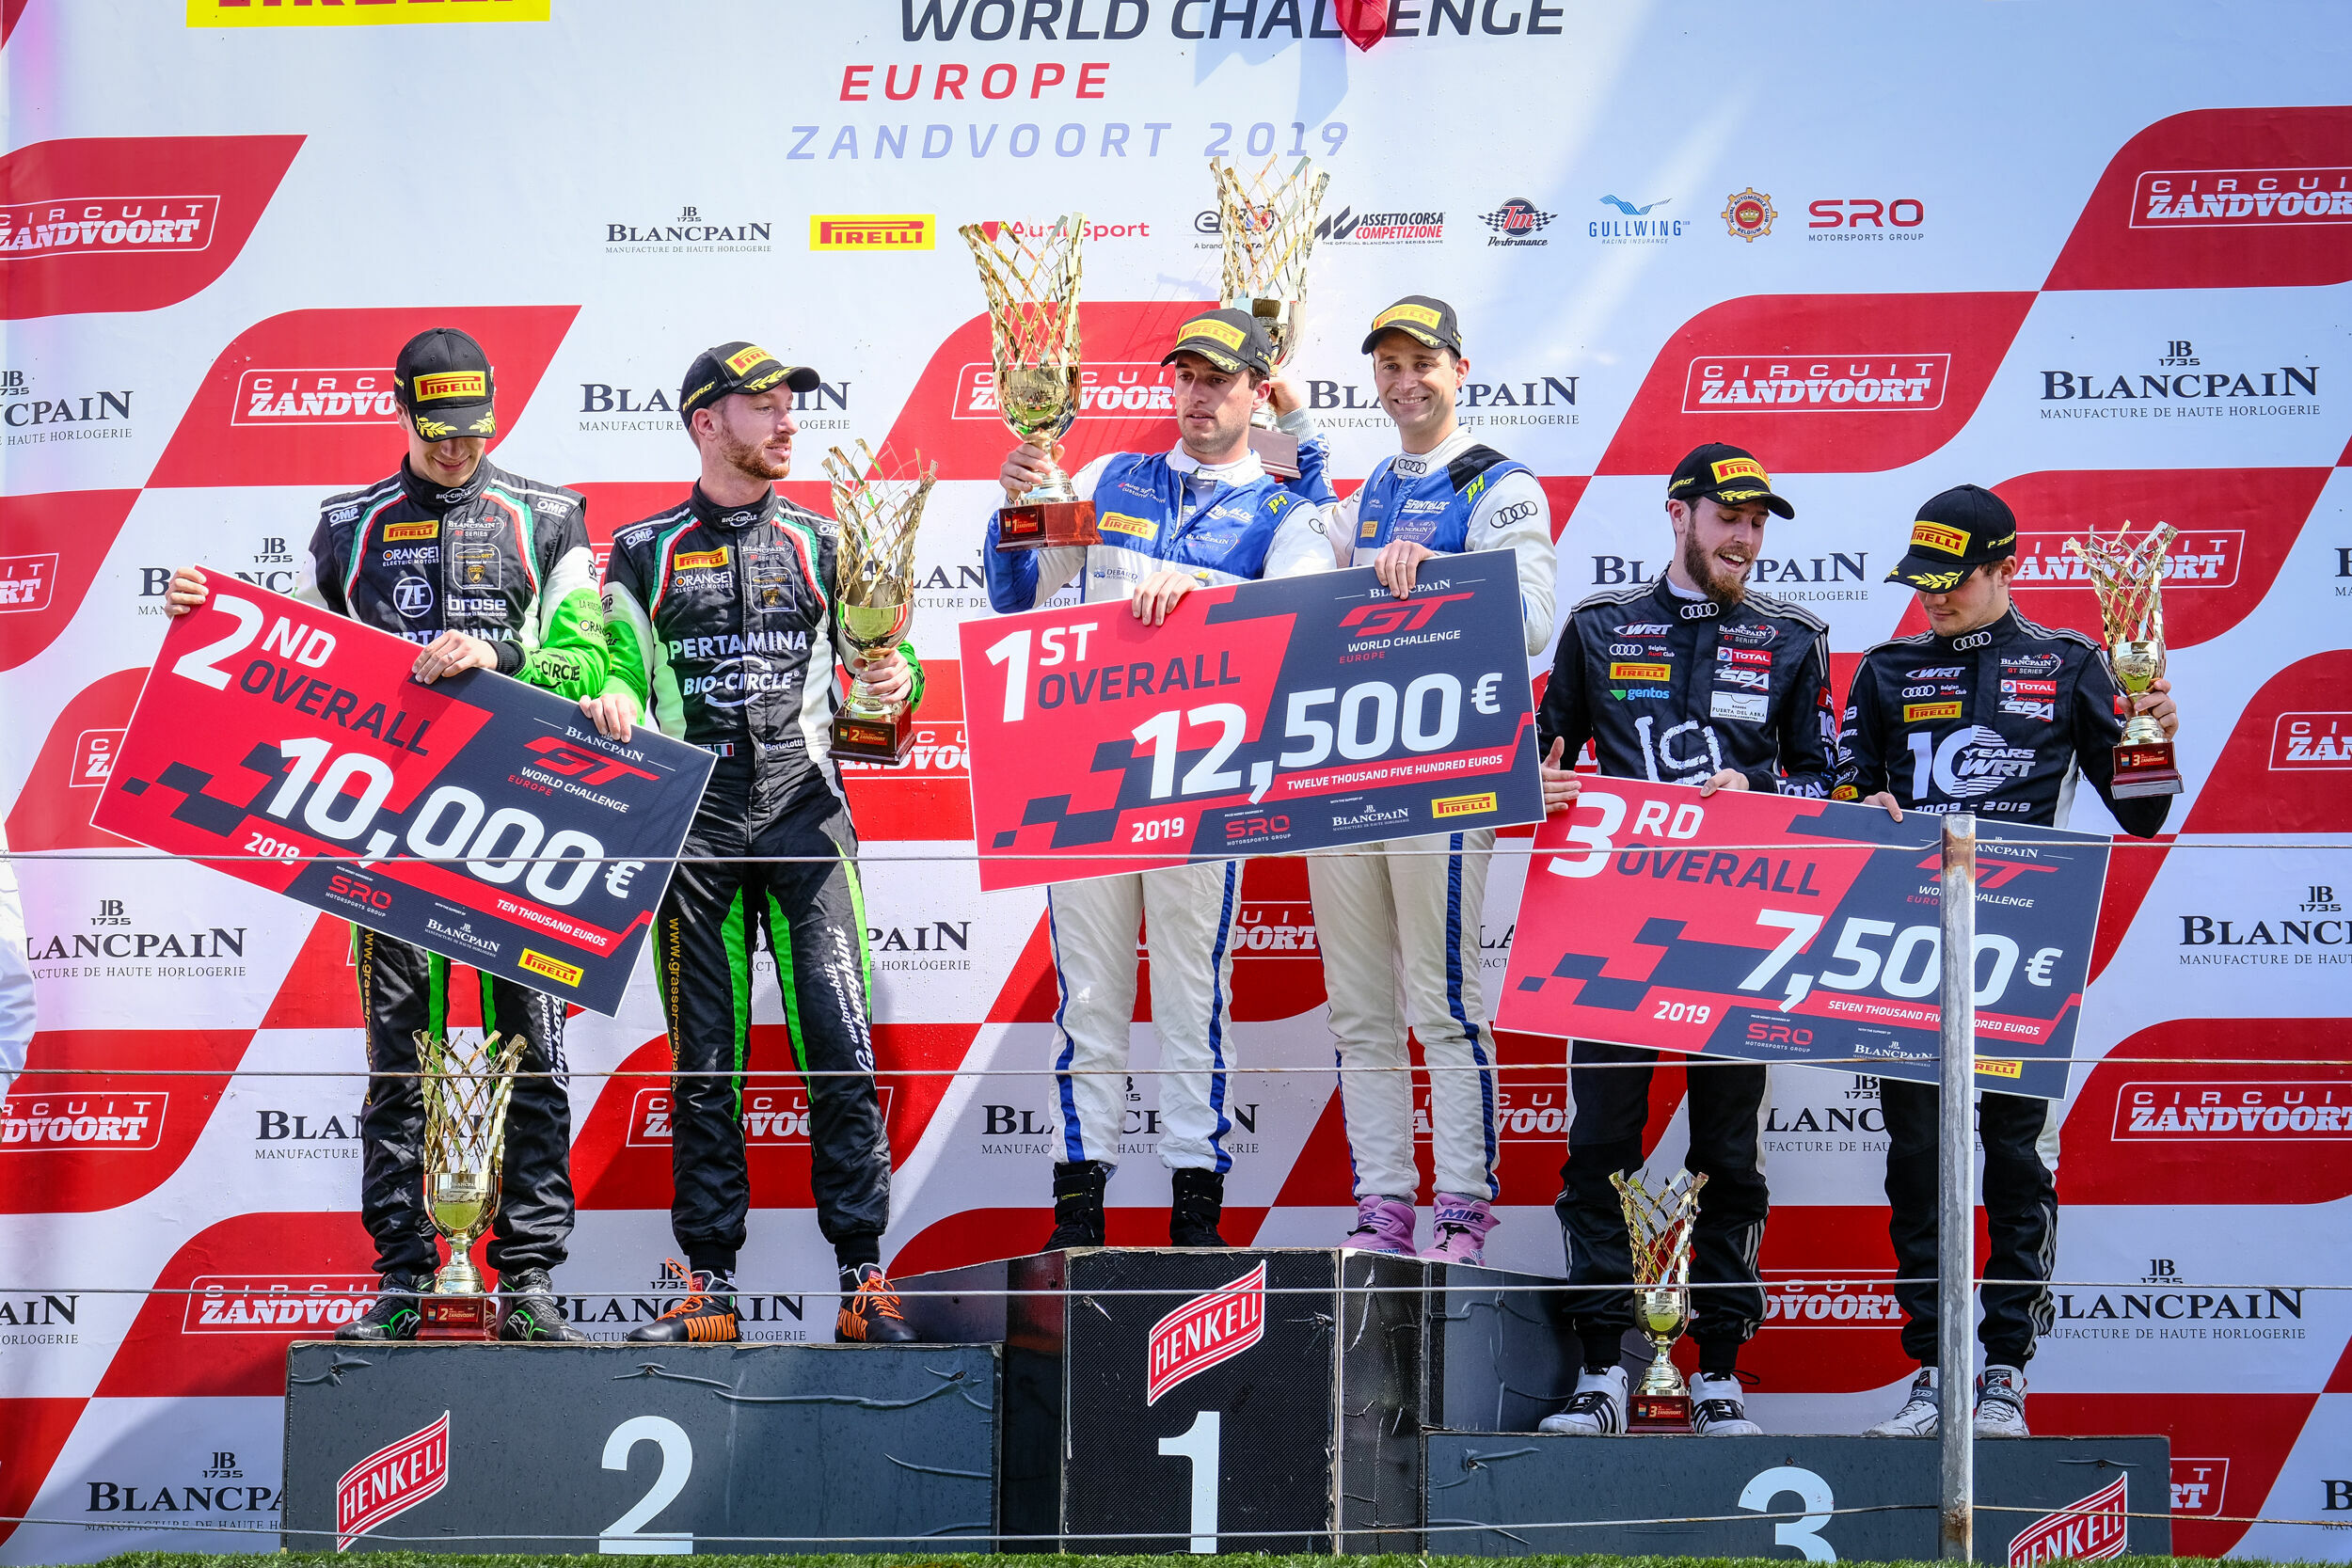 Blancpain GT World Challenge Europe 2019